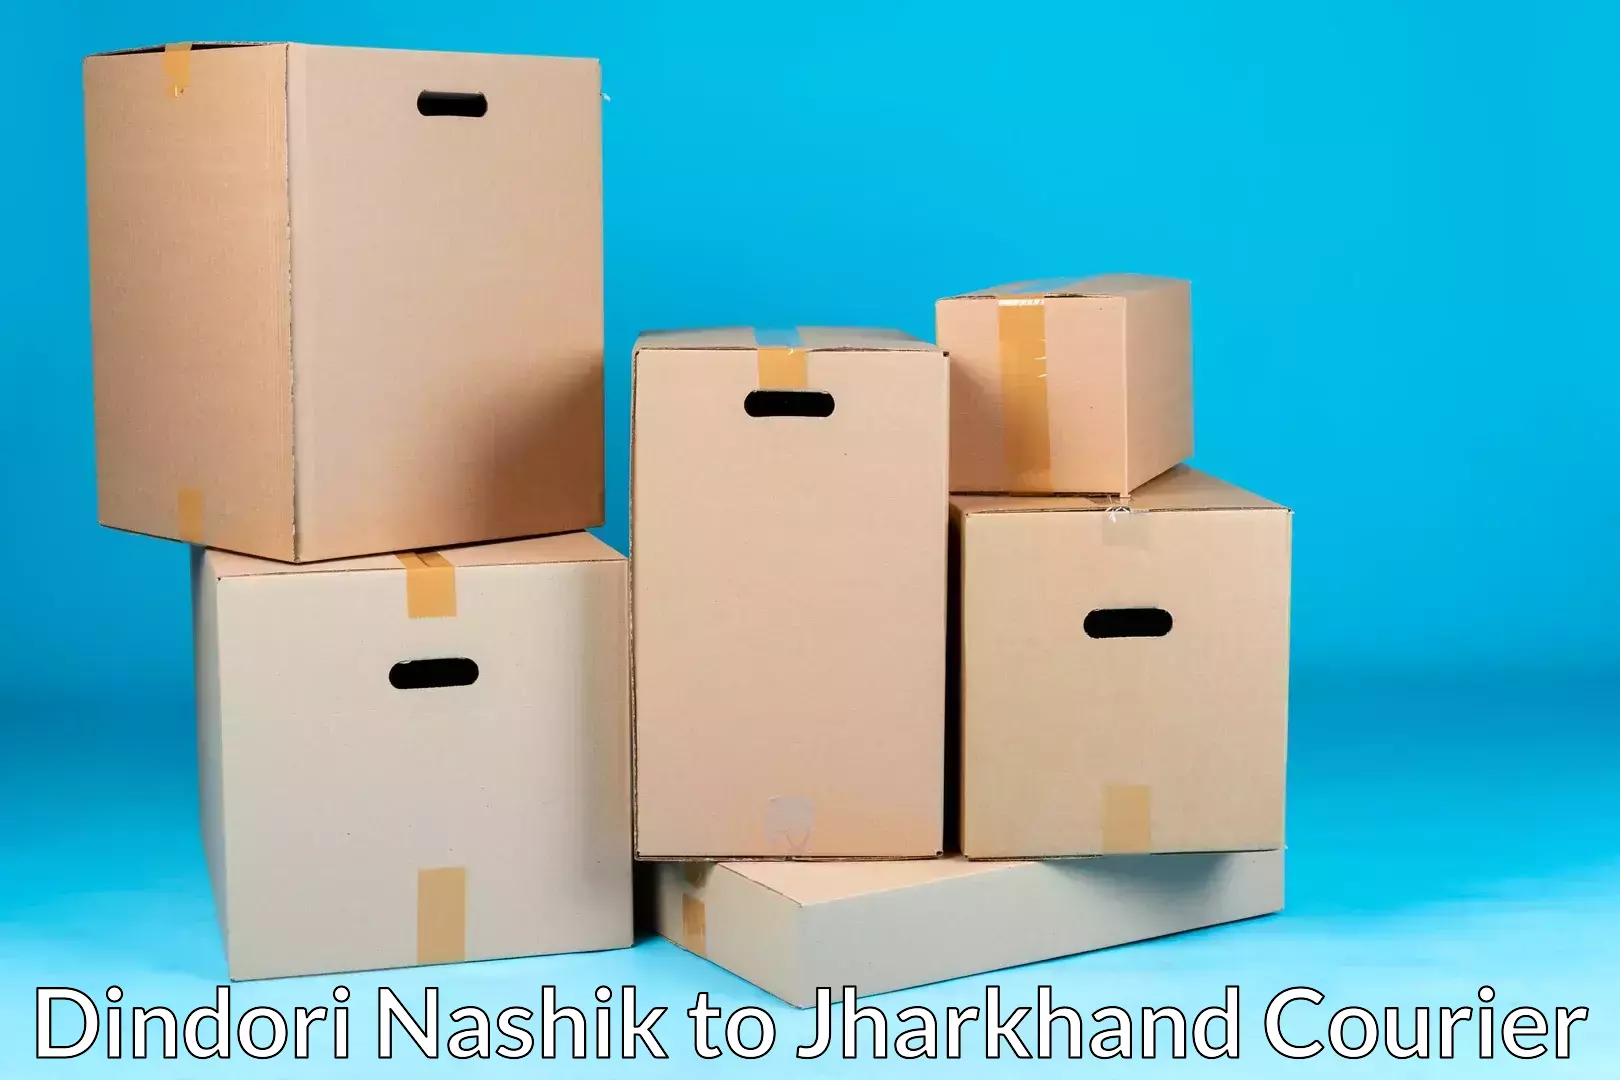 Professional moving company Dindori Nashik to Jharkhand